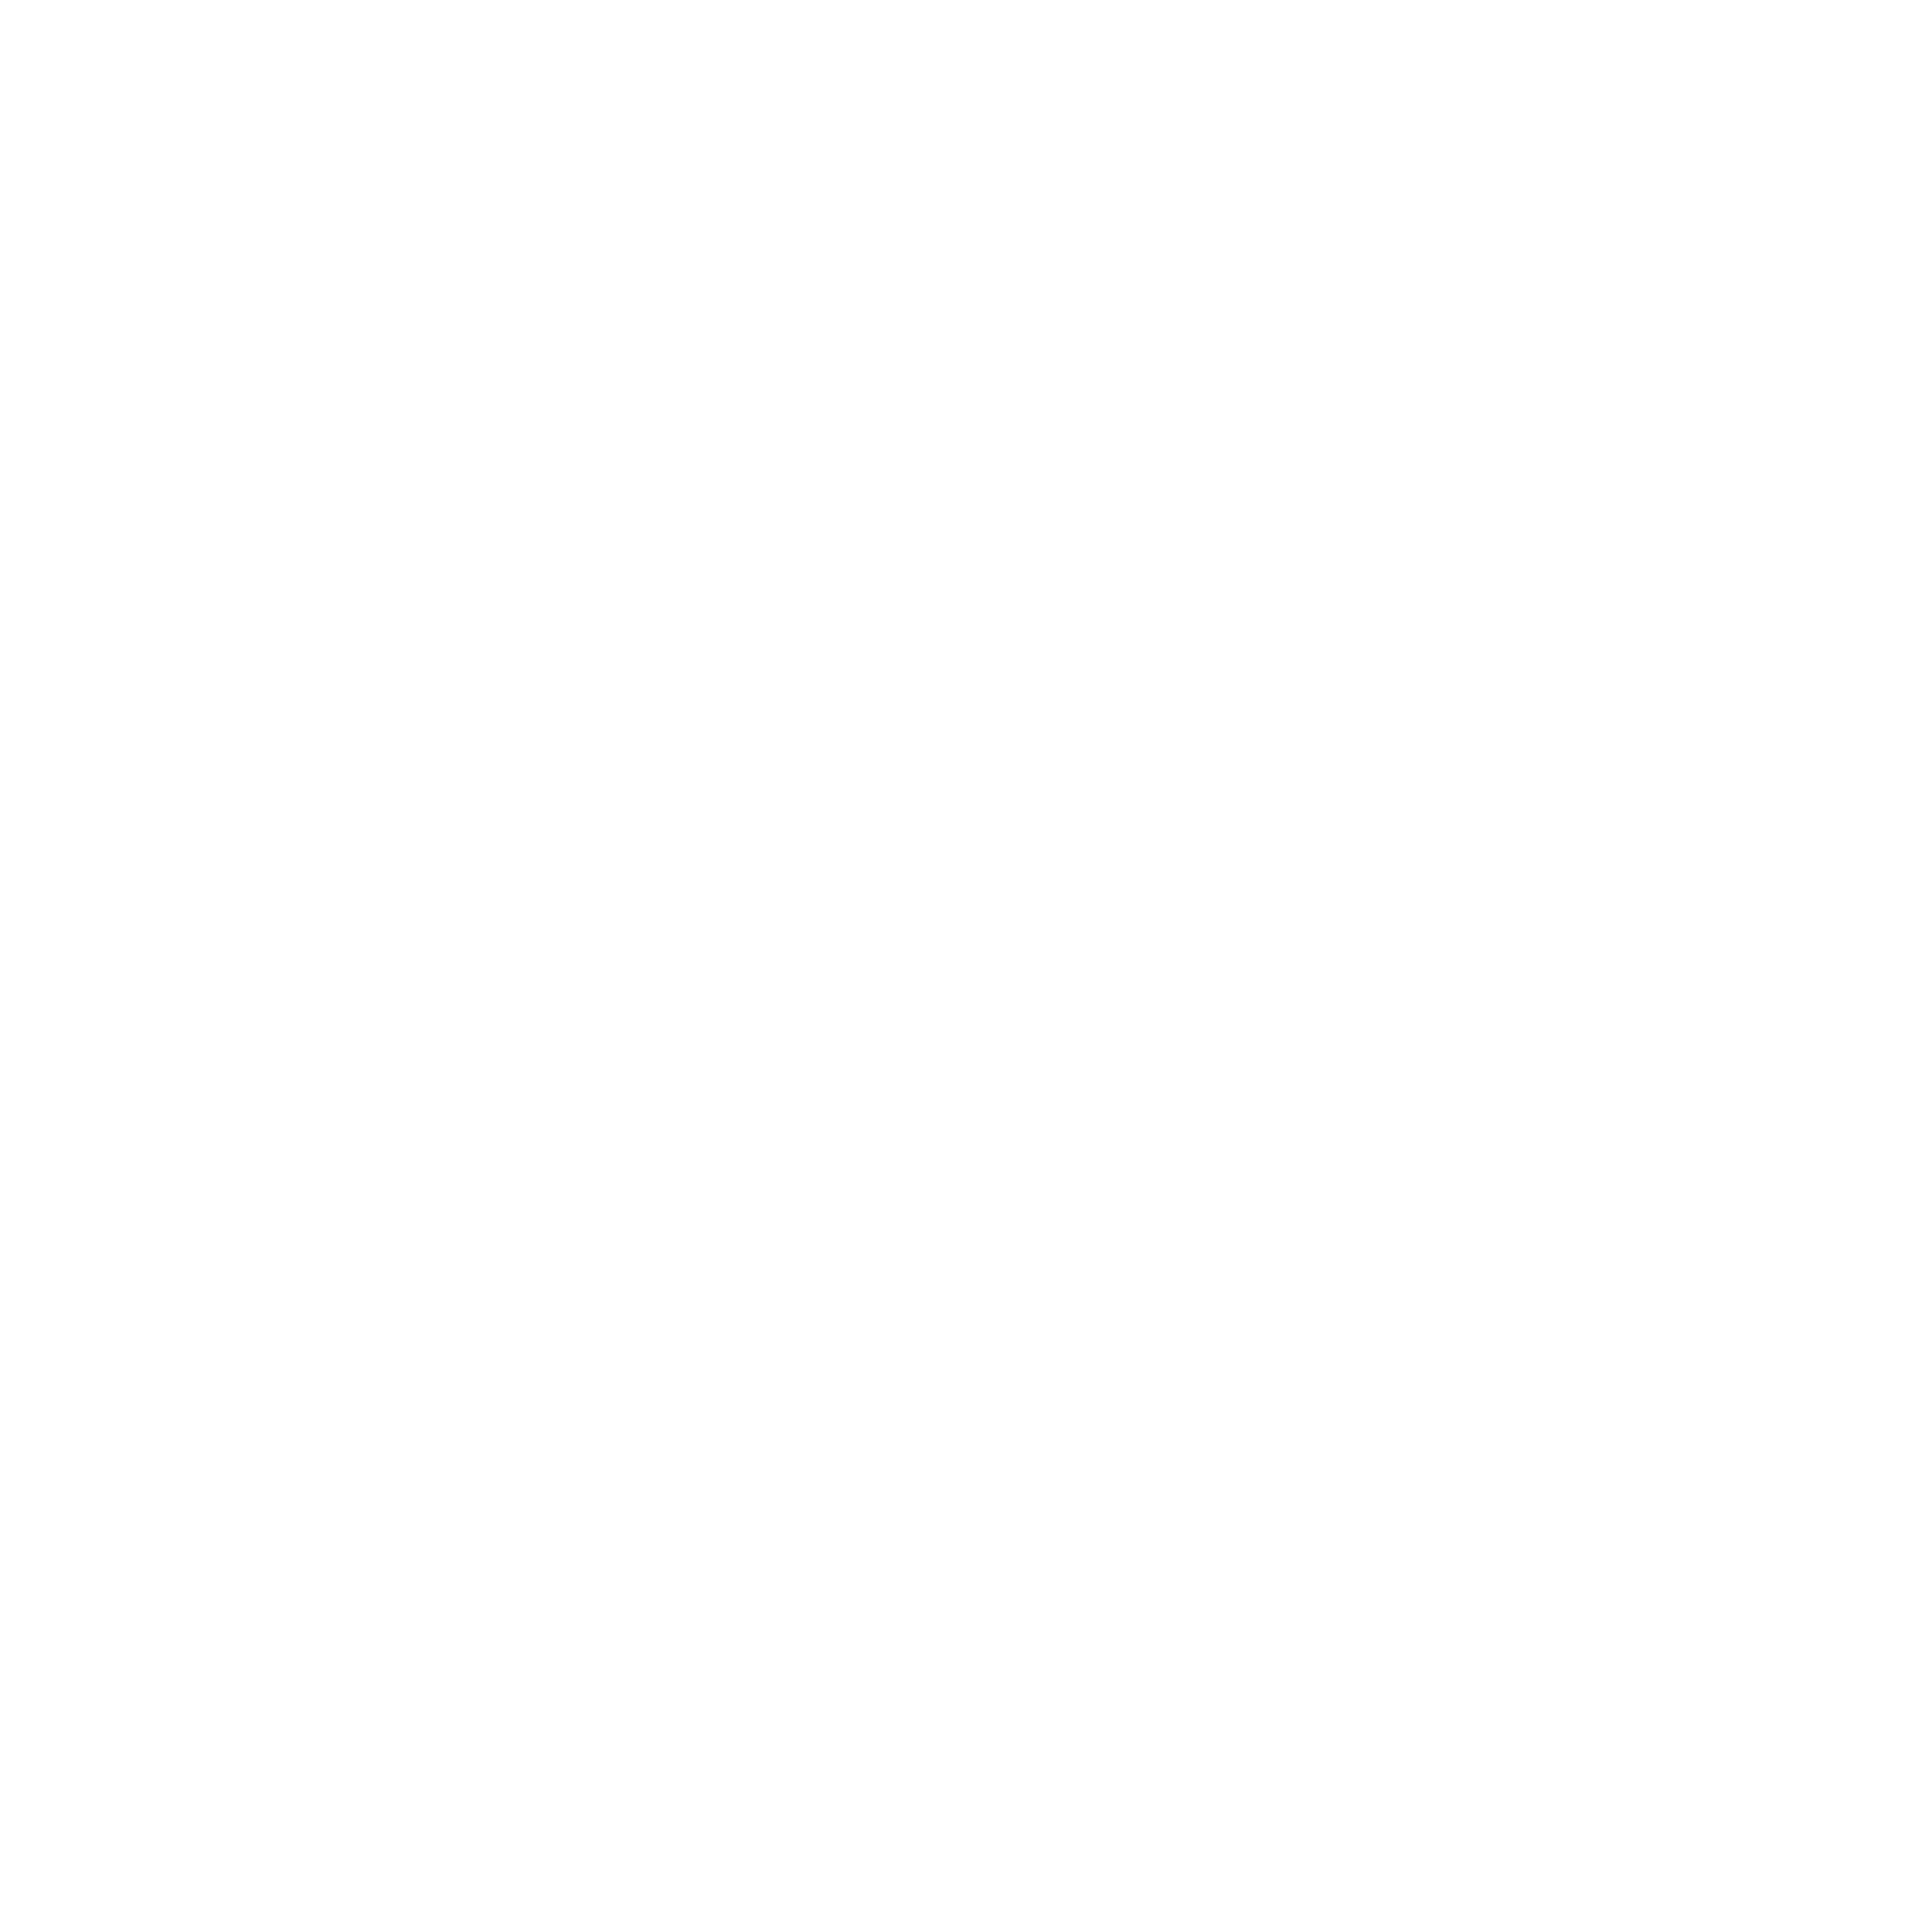 Hart-logos-black-trans4.png